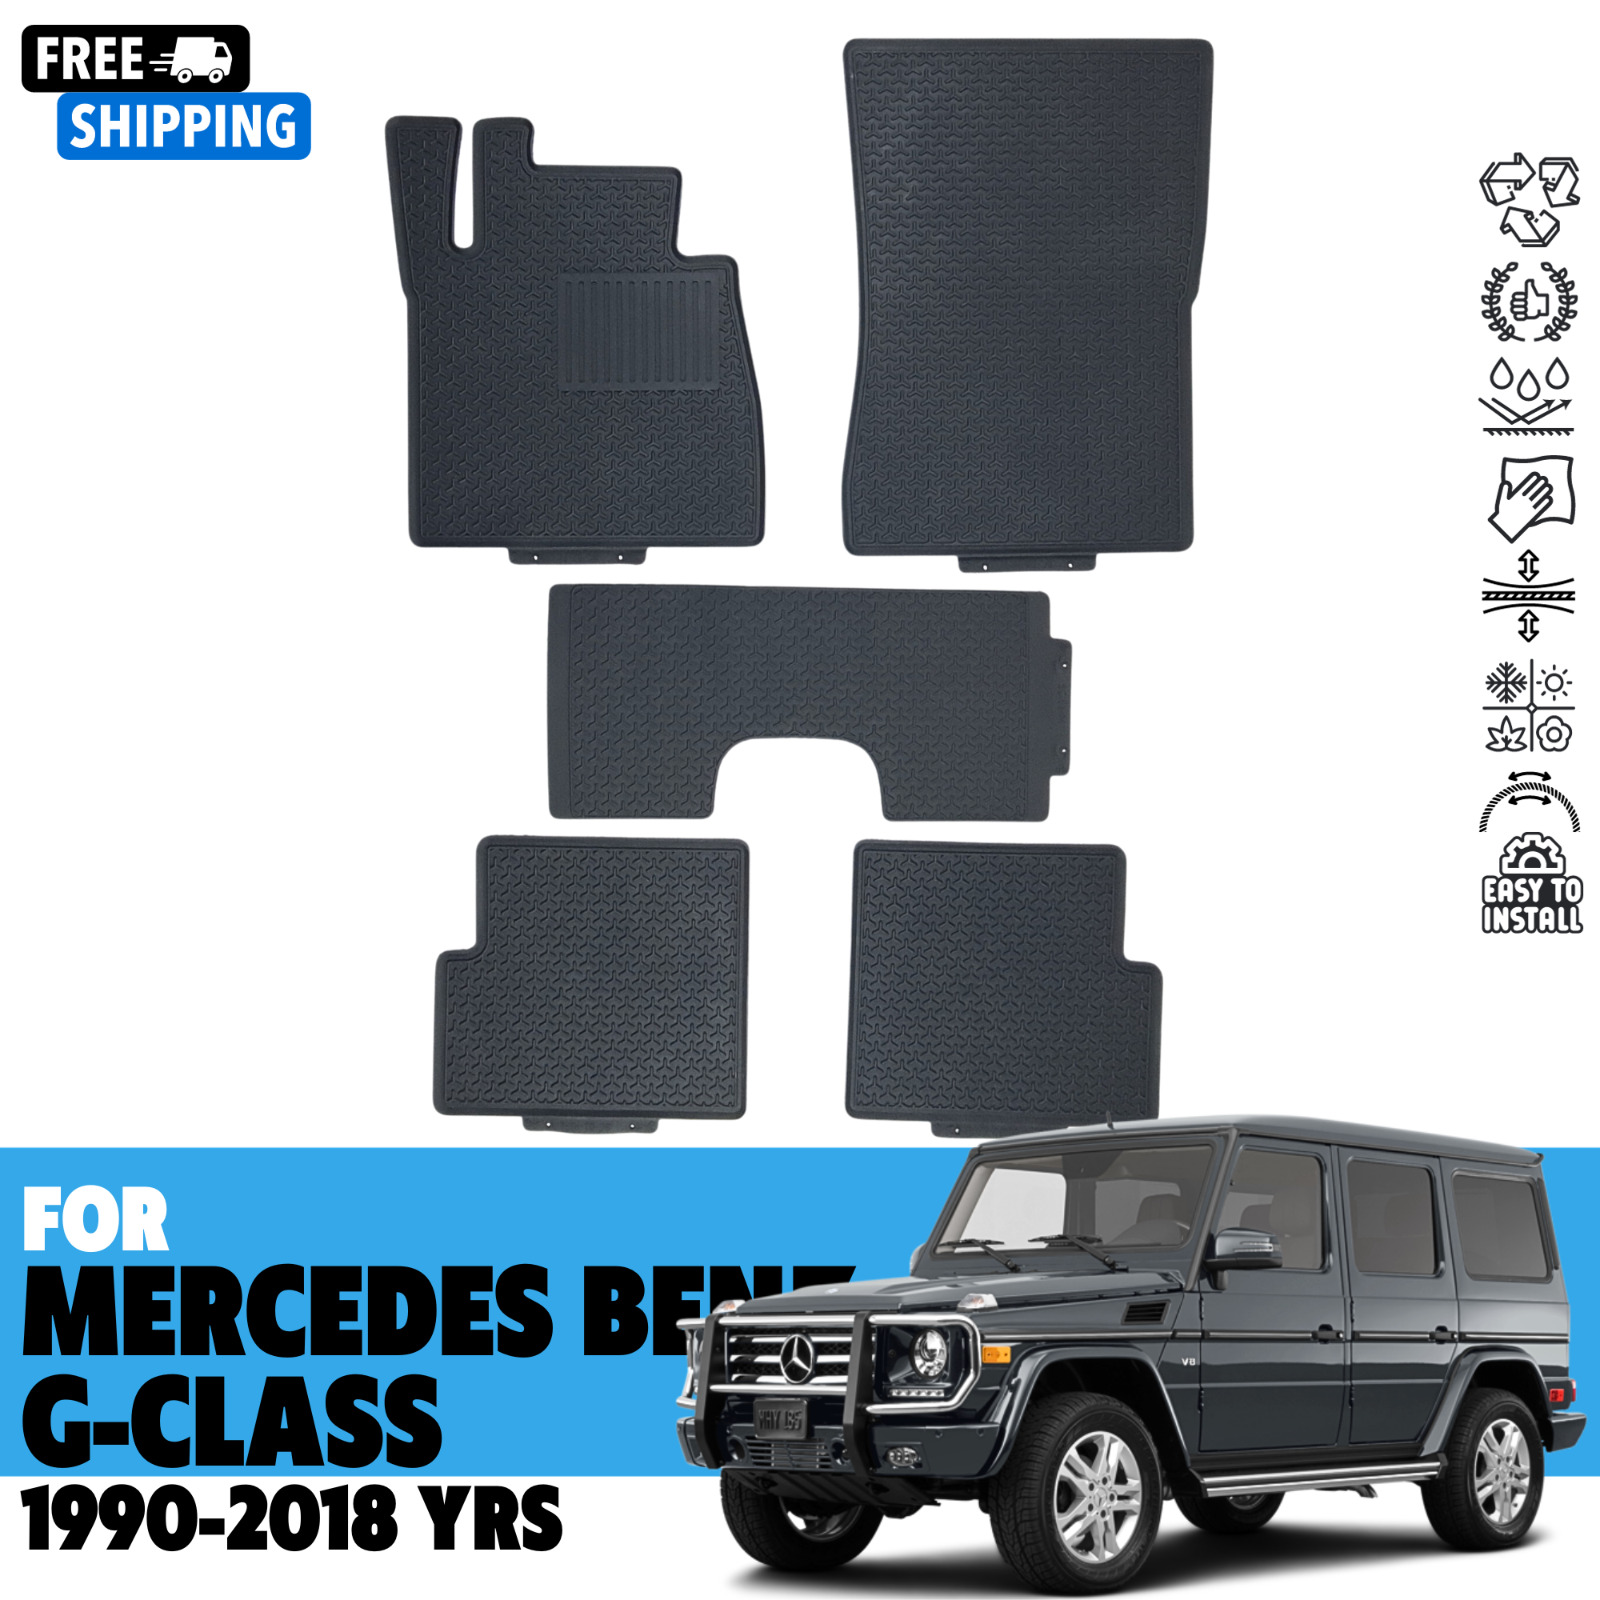 Floor mats for 1990-2018 Mercedes Benz G-Class All Weather Super Heavy Duty